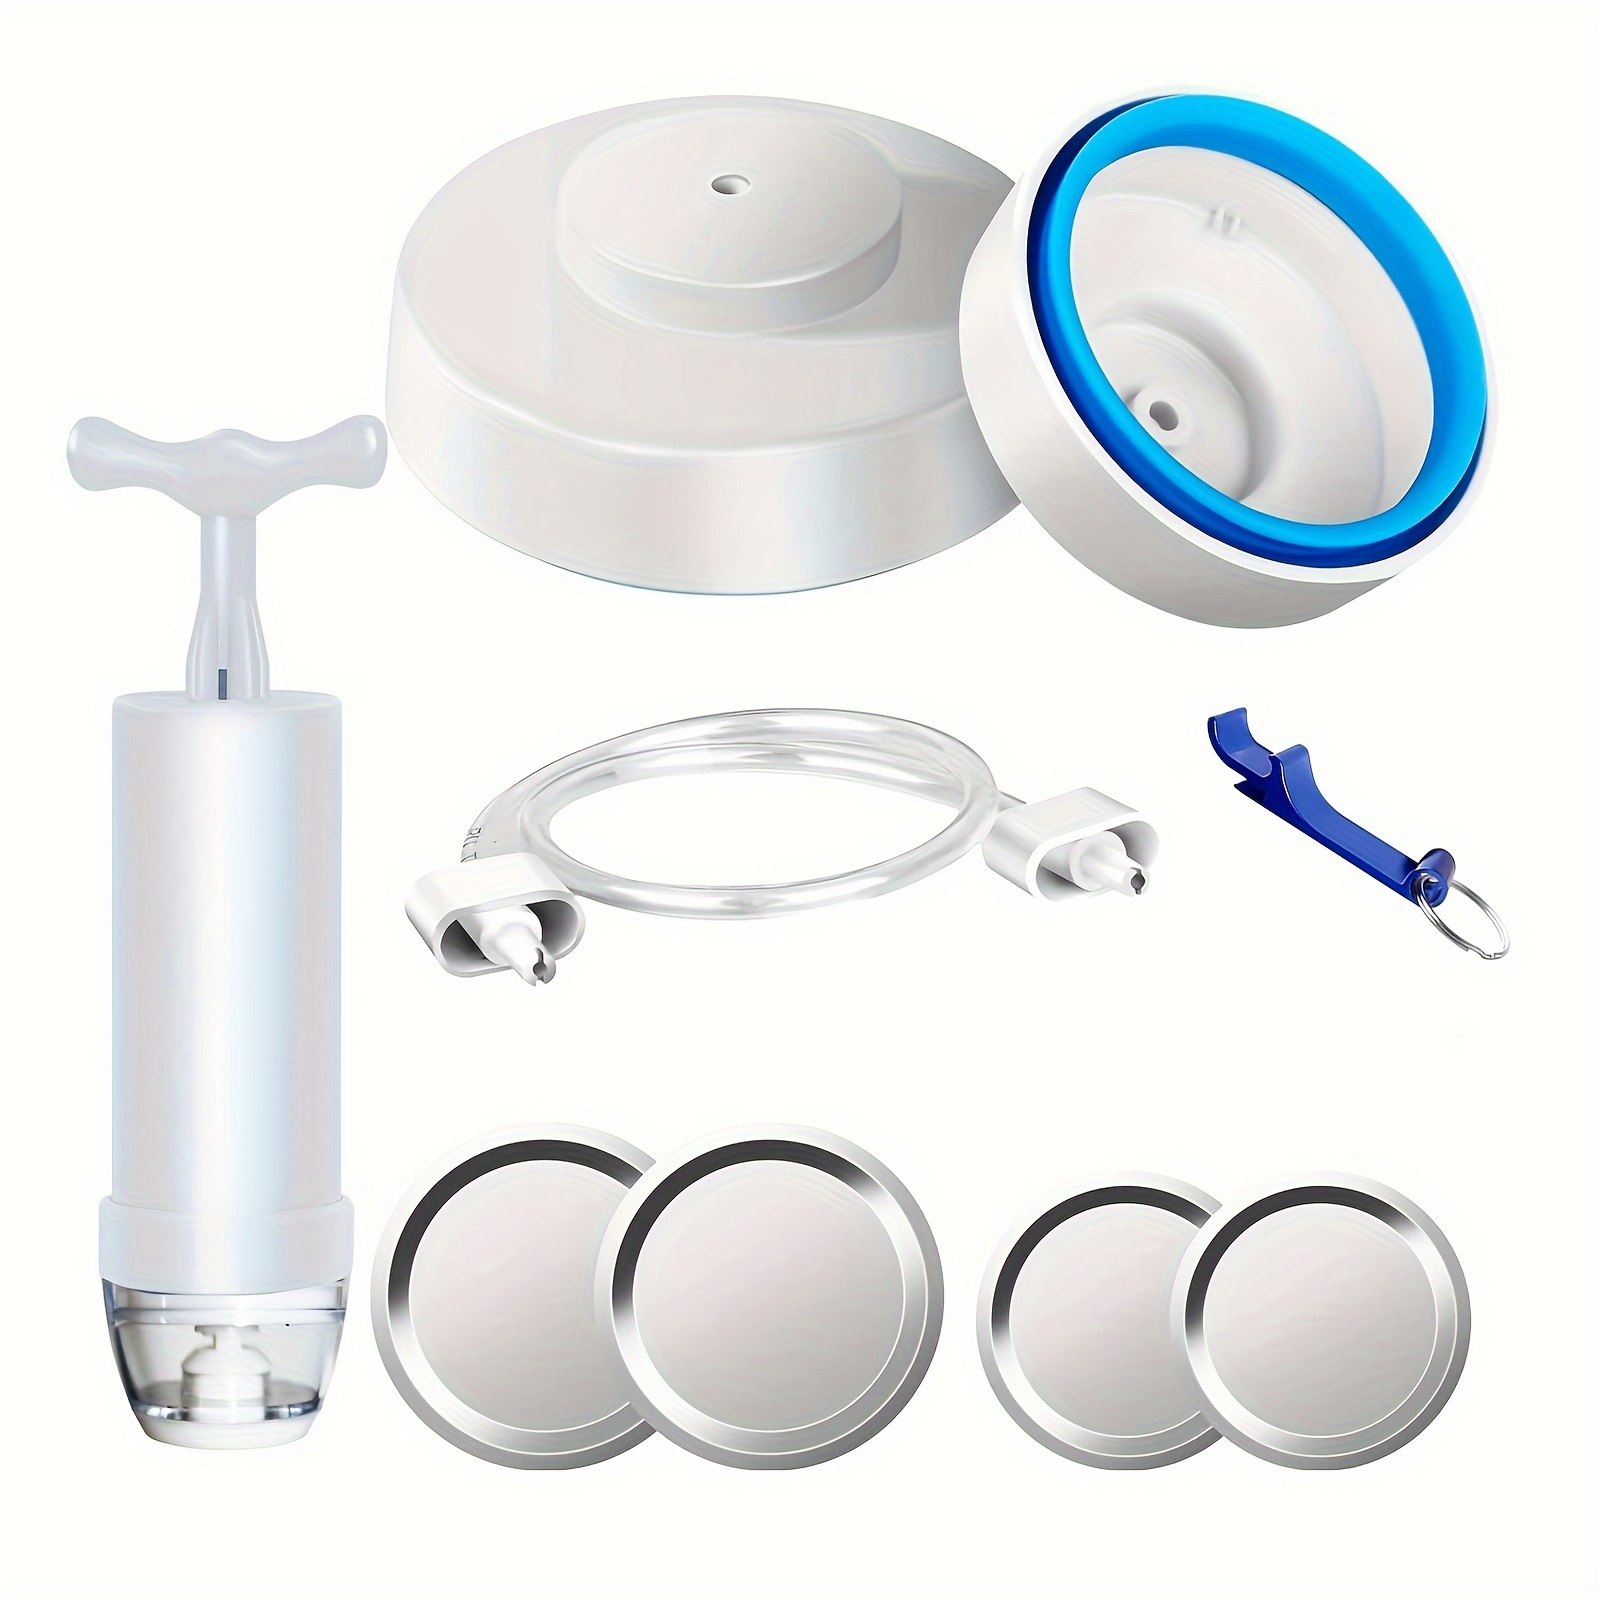 Vacuum Sealing Kit for Regular and Wide Mouth Mason Jars Vacuum Kit + Hand Pump